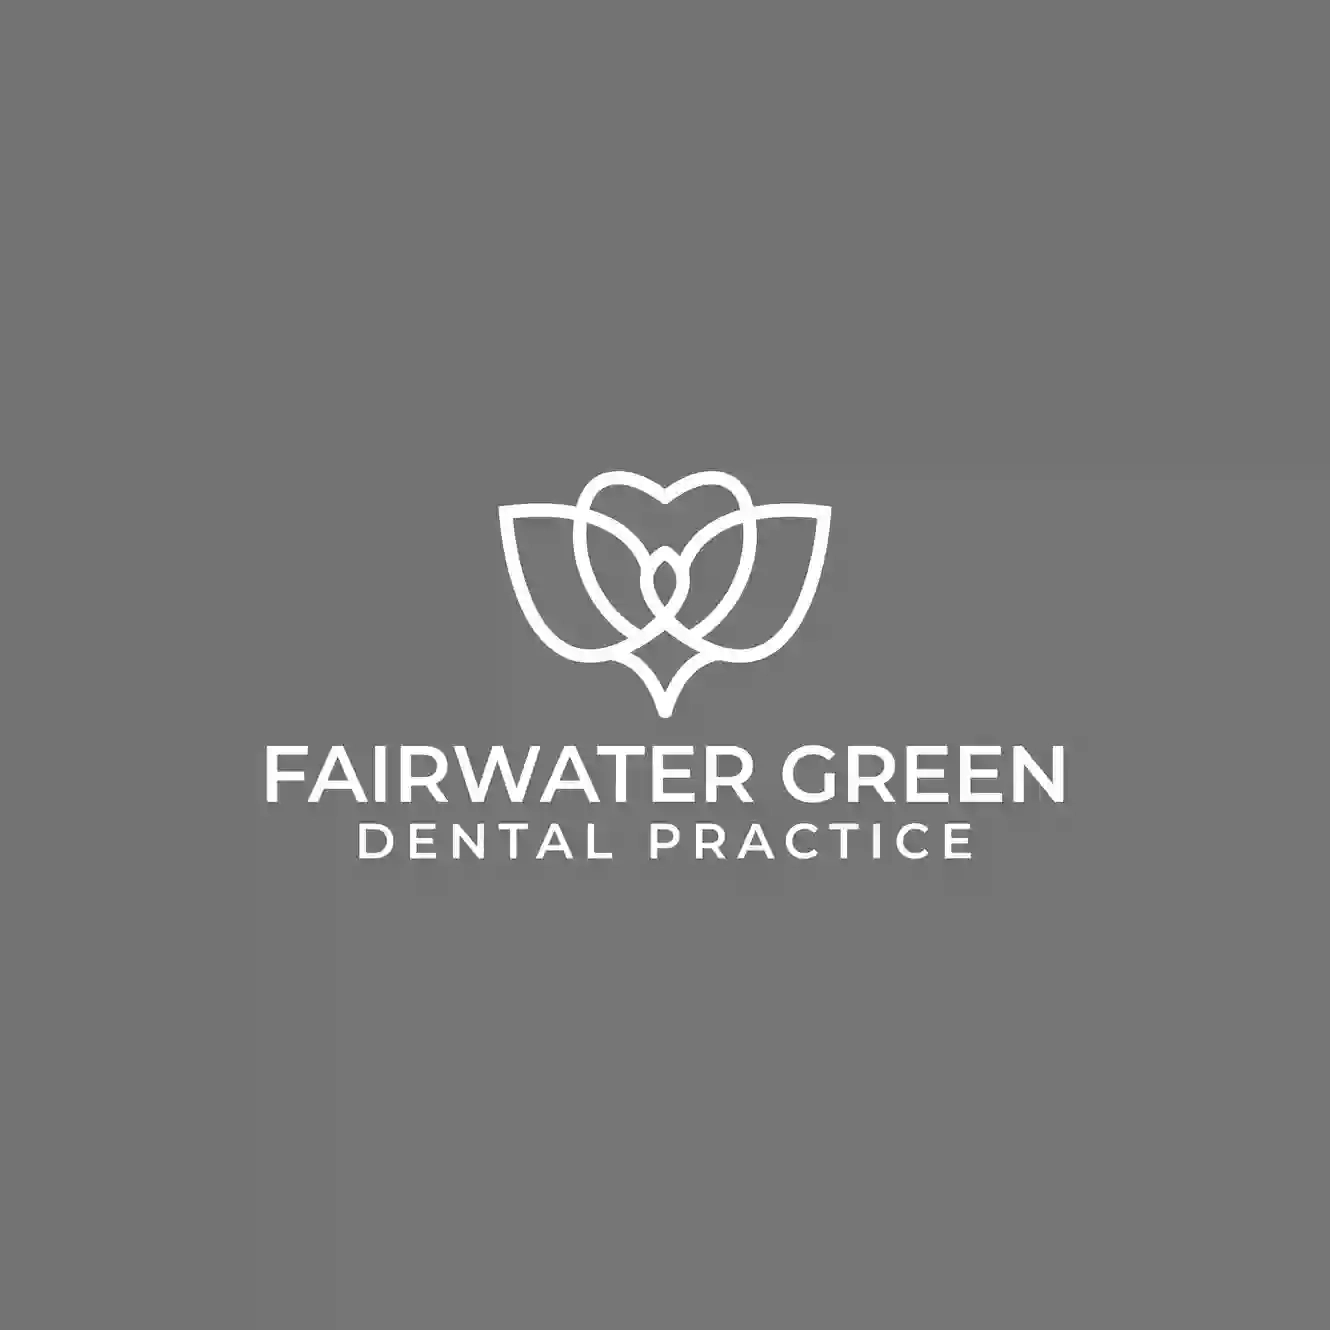 Fairwater Green Dental Practice